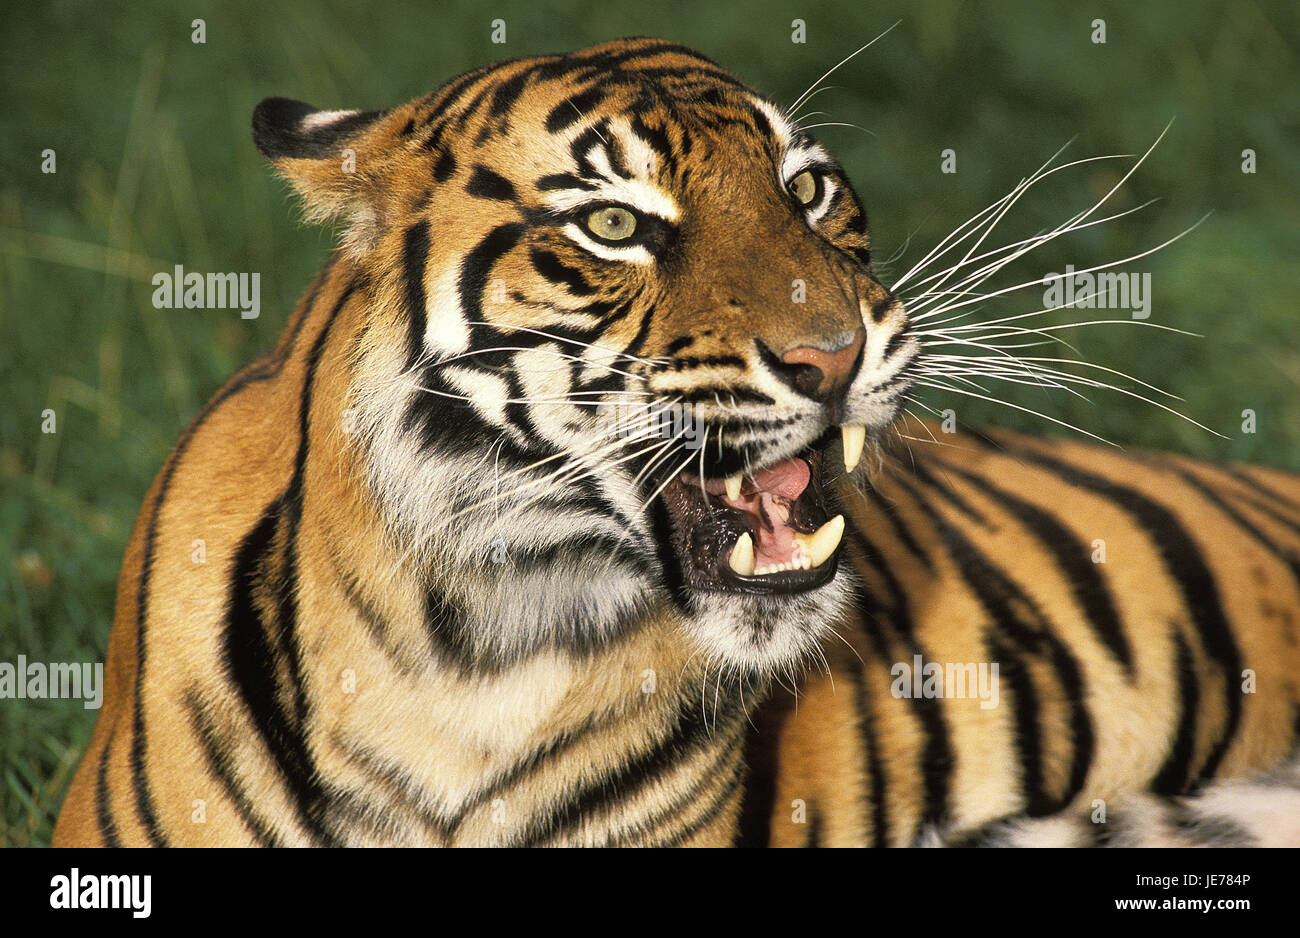 Tigre de Sumatra, Panthera tigris sumatrae, animal adulto, retrato, Foto de stock